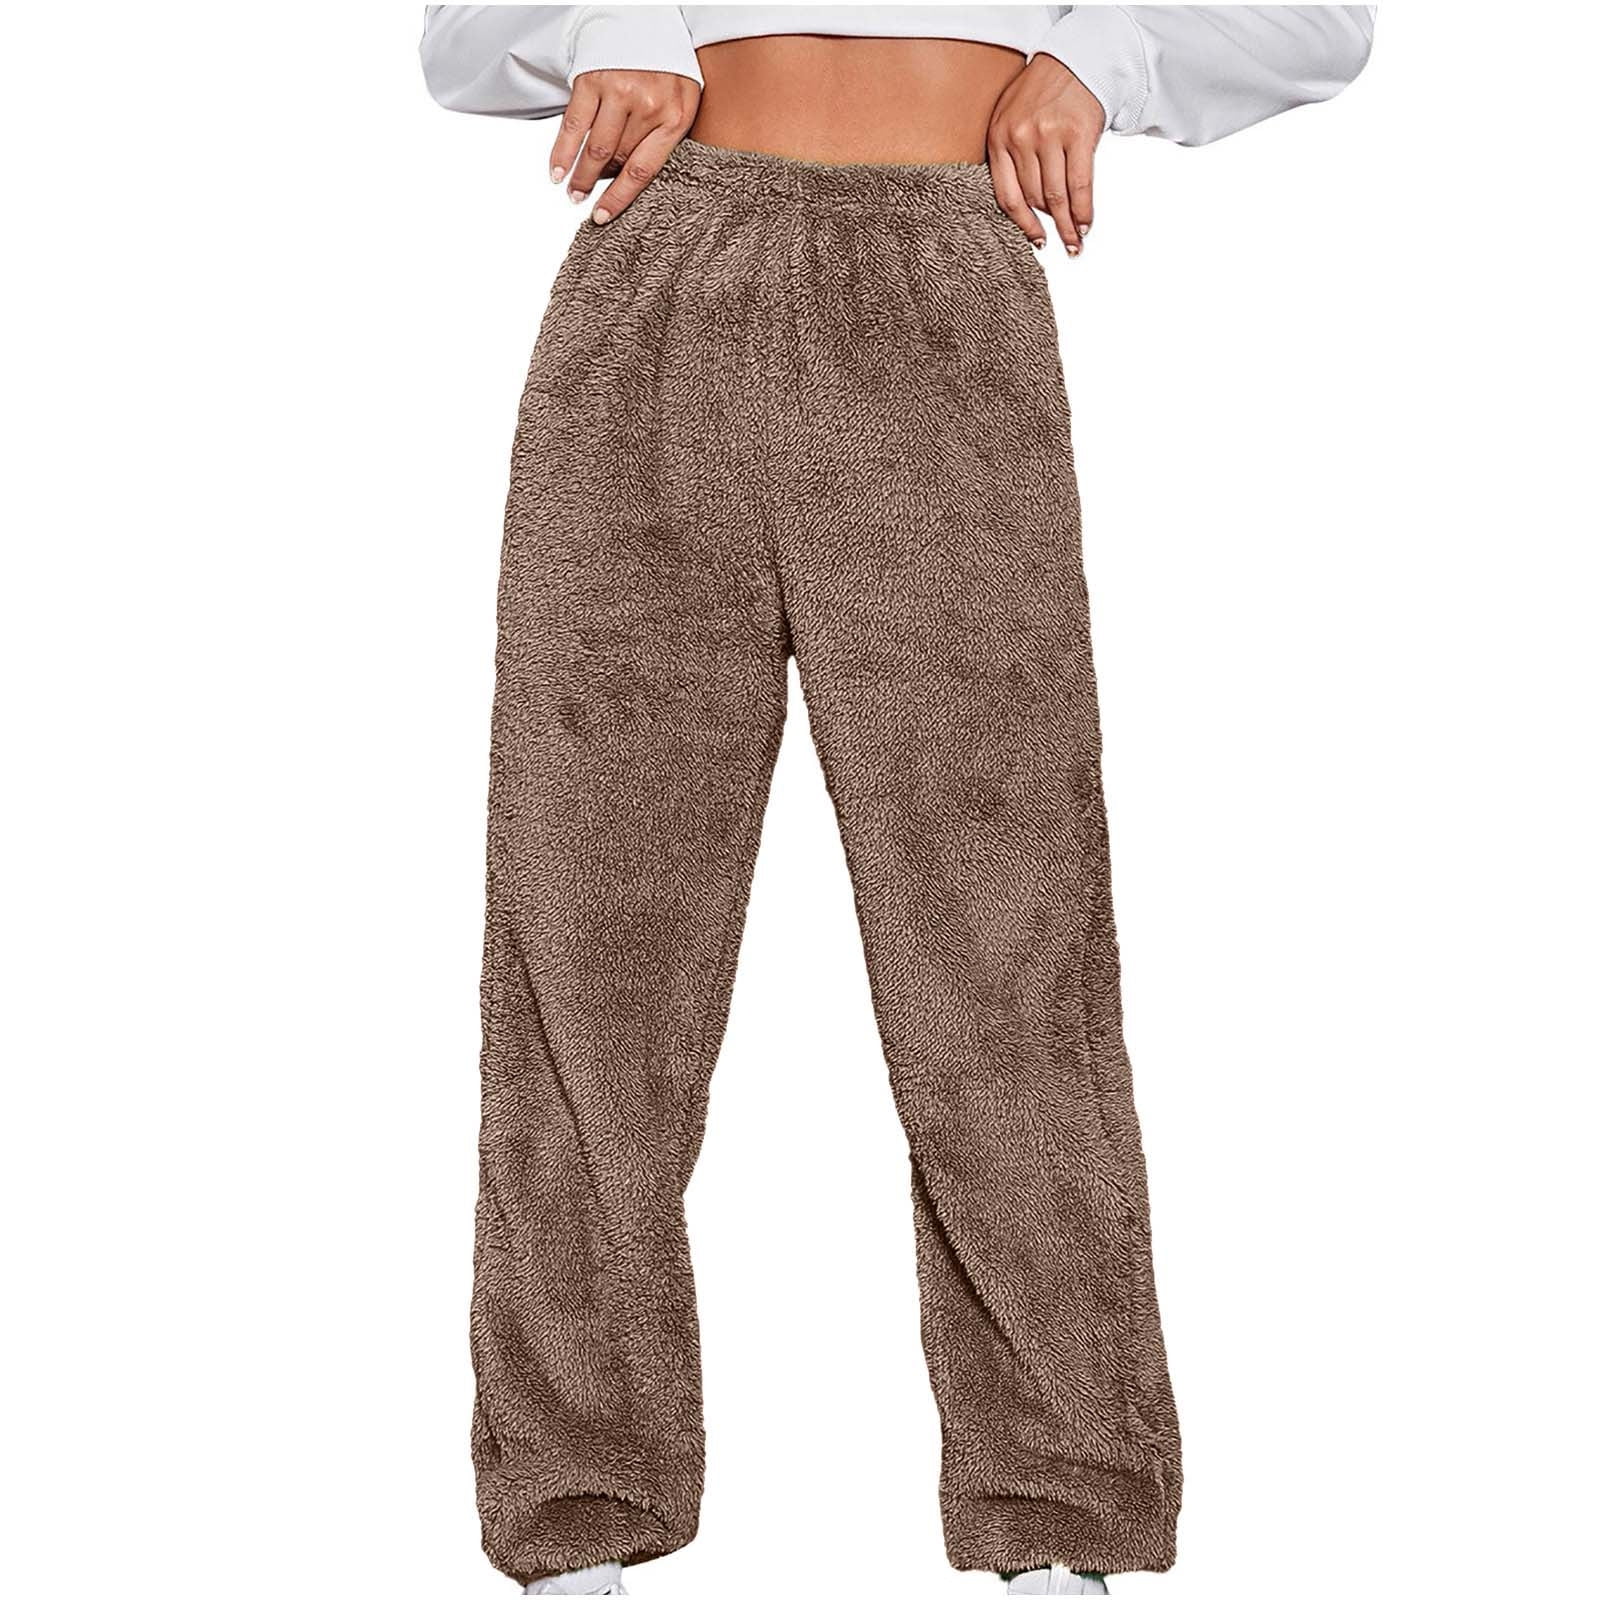 OGLCCG Women's Plush Fuzzy Pajama Pants Plus Size Winter Warm Cozy Fluffy Pj  Bottoms Casual Loose Elastic Waist Lounge Pants Sleepwear 